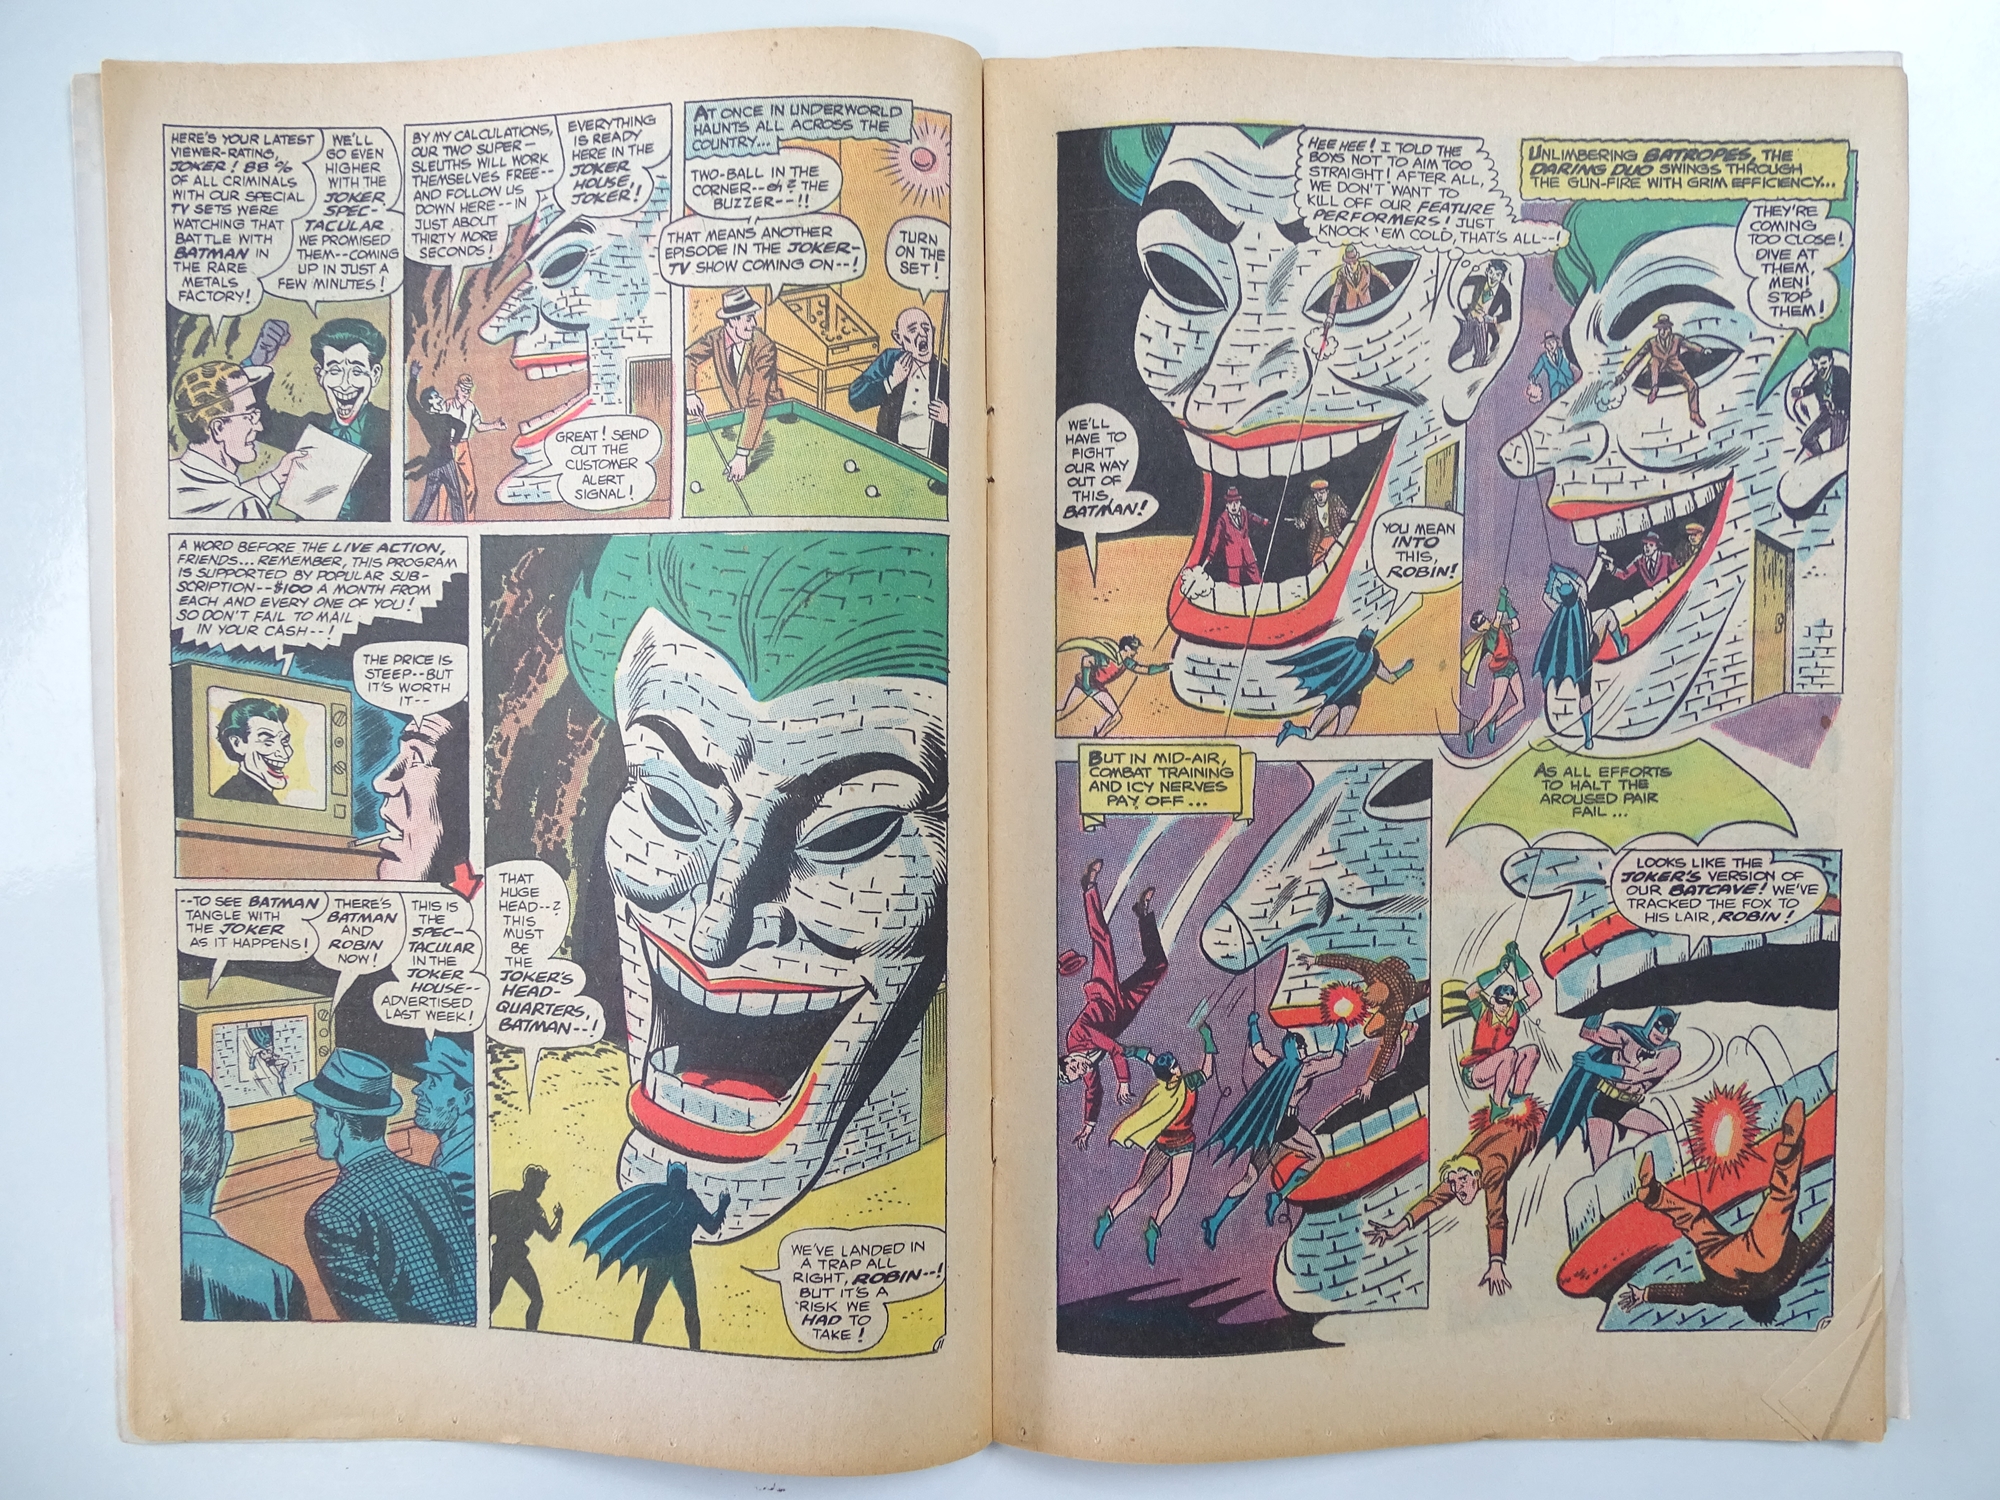 DETECTIVE COMICS: BATMAN #365 - (1967 - DC - UK Cover Price) - Joker appearance + Elongated Man back - Image 5 of 6